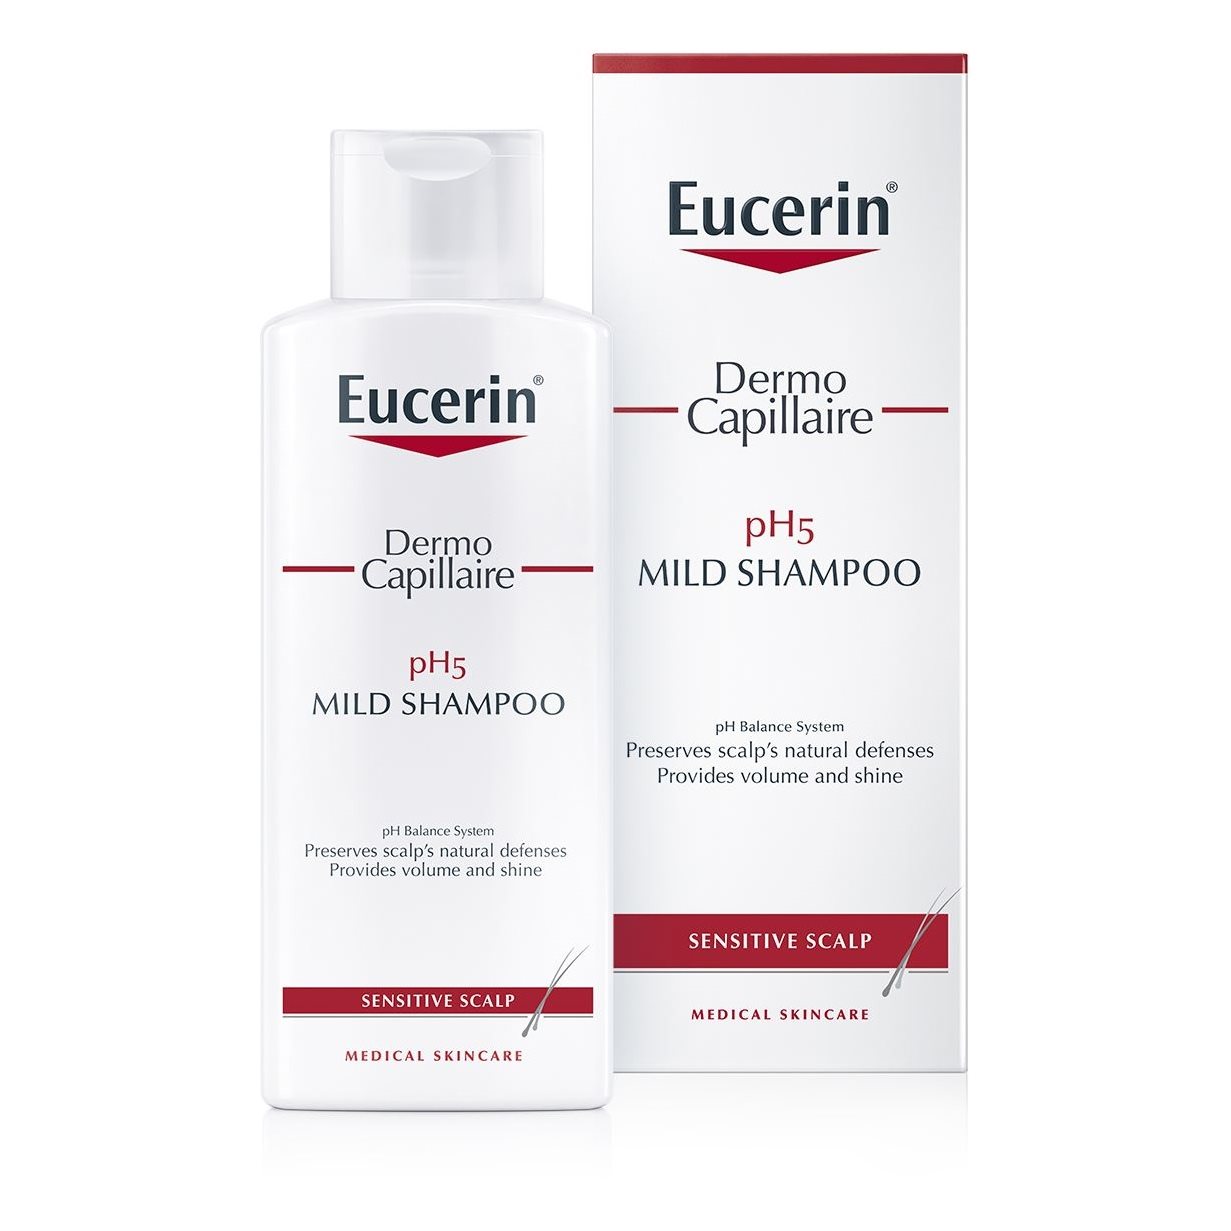 Eucerin DermoCapillaire ph5 Mild Shampoo